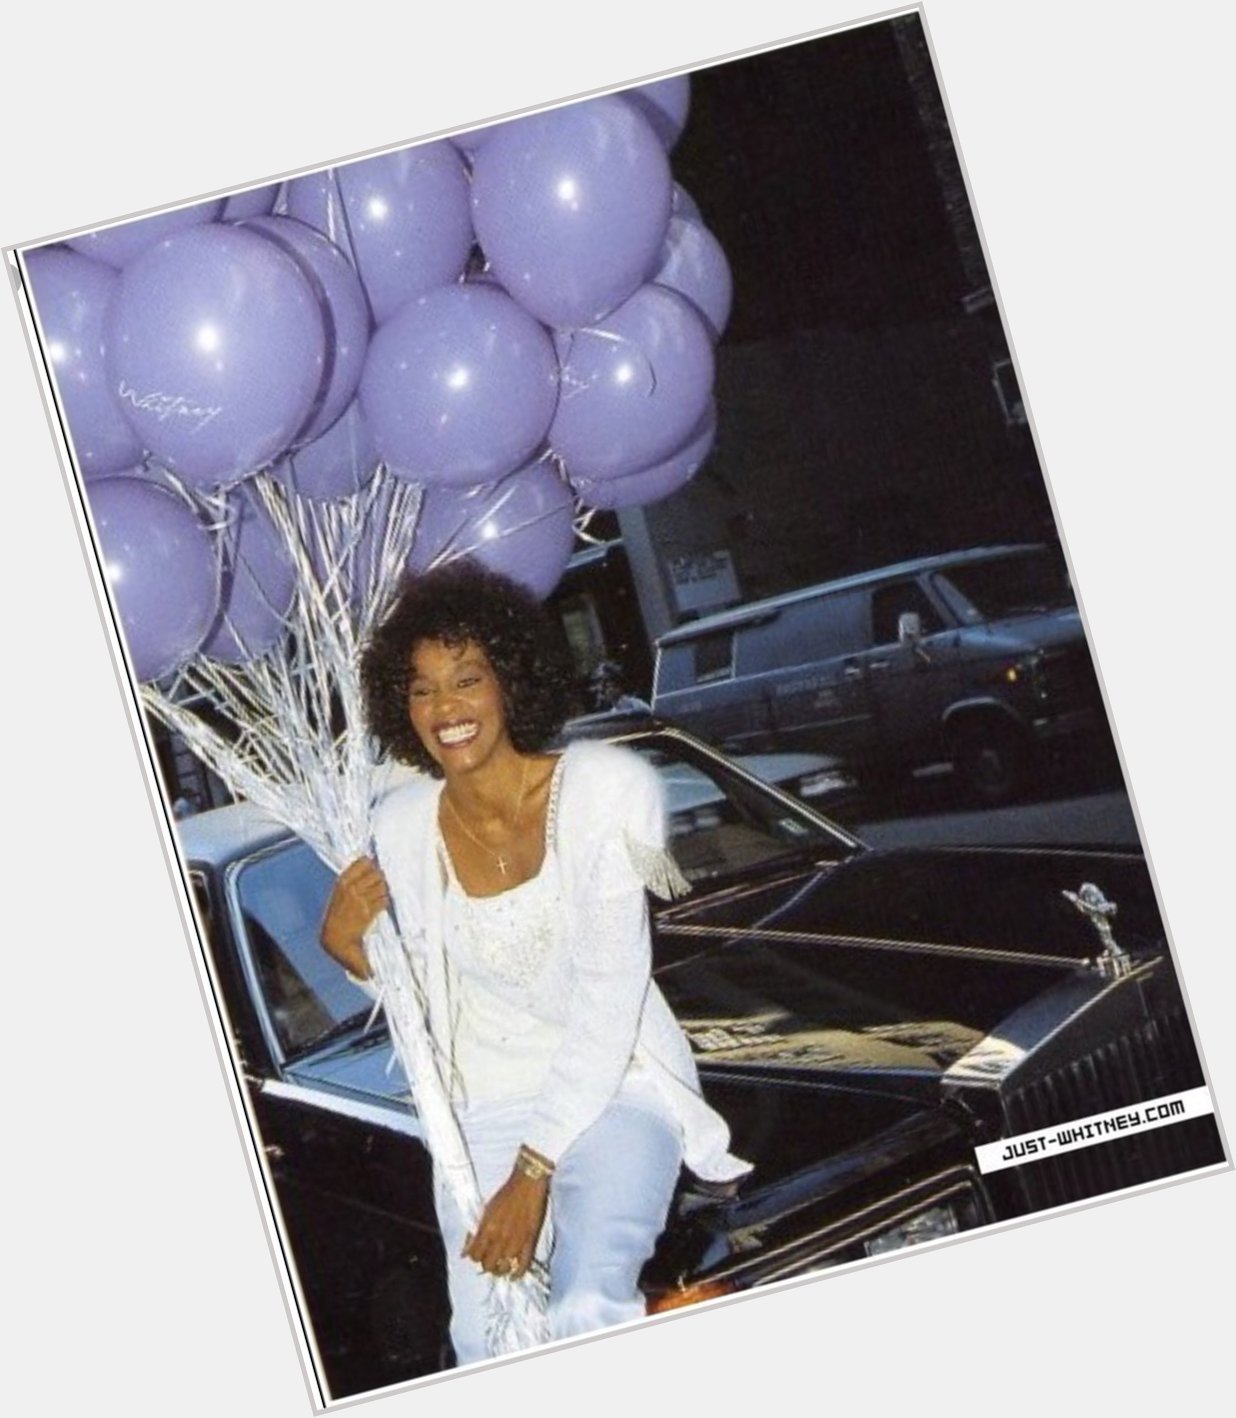  Happy 56th Birthday in Heaven Whitney Houston. Rest in paradise.   